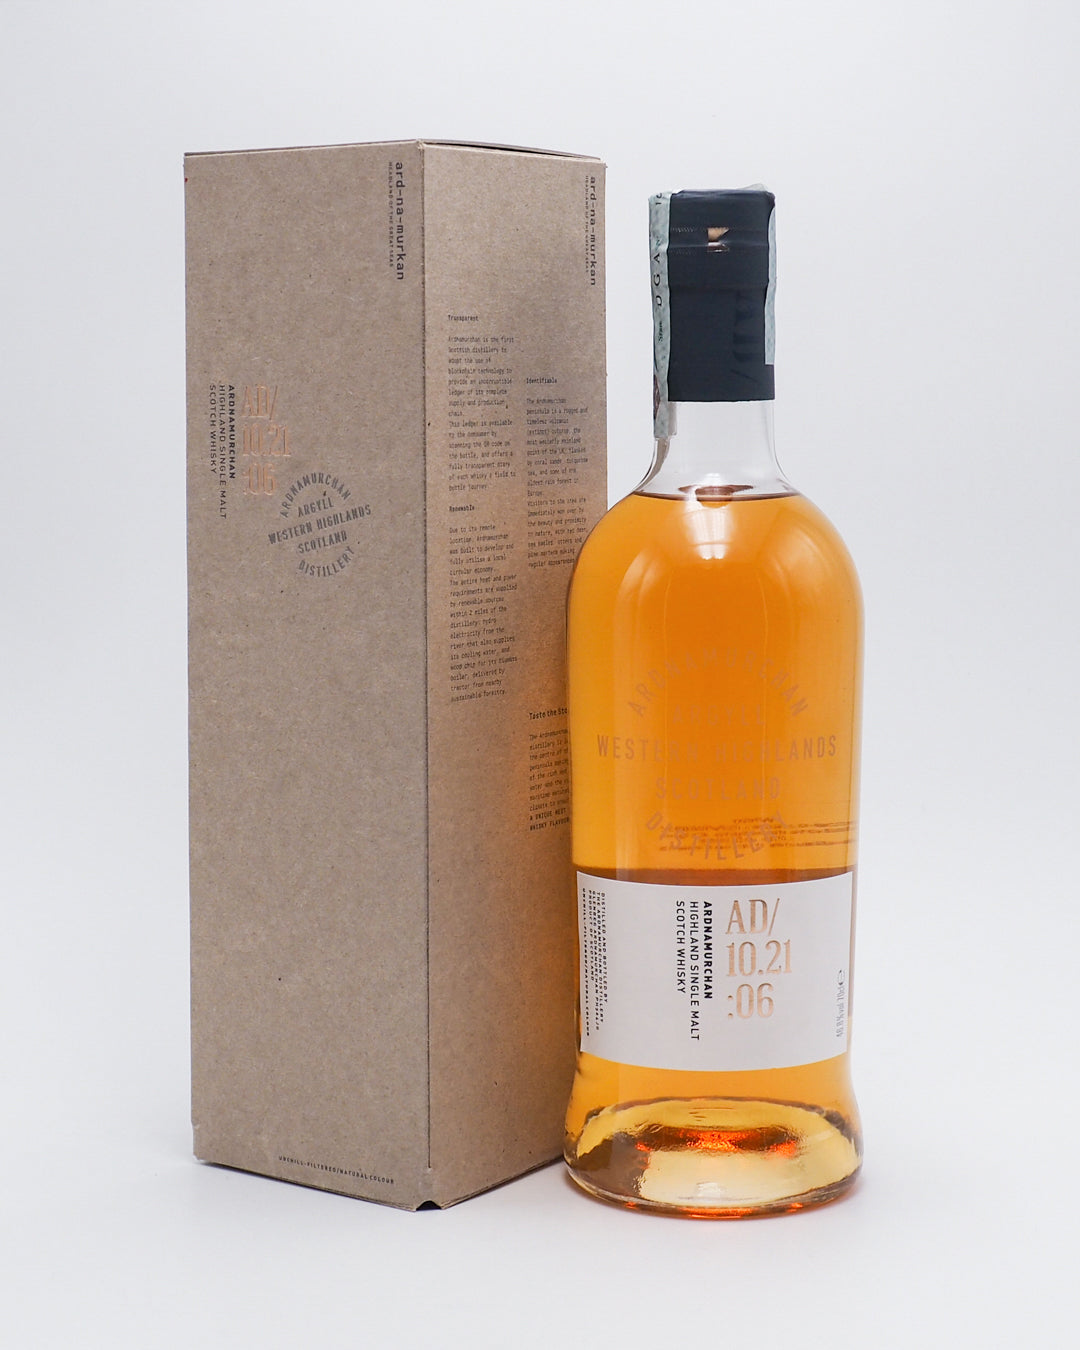 whisky-ardnamurchan-ad-10-21-06-single-malt